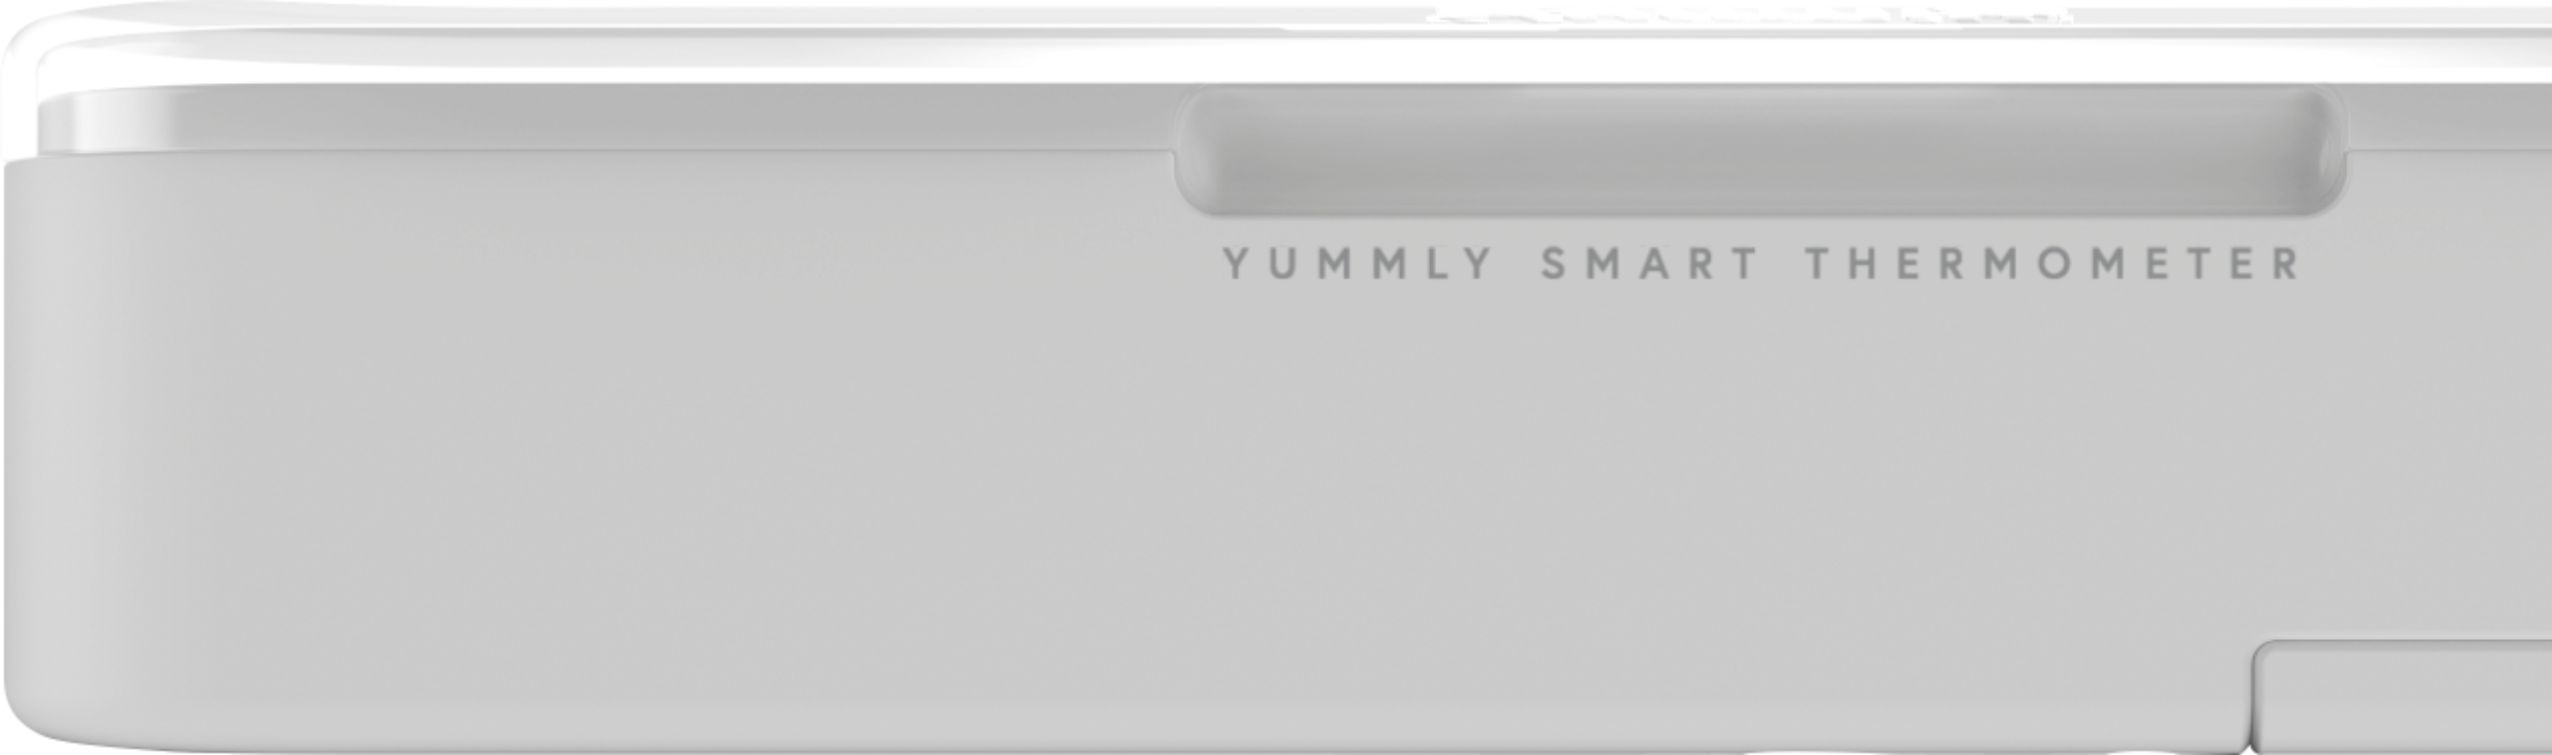 Yummly Premium Wireless Smart Meat Thermometer YTE000W5KW White